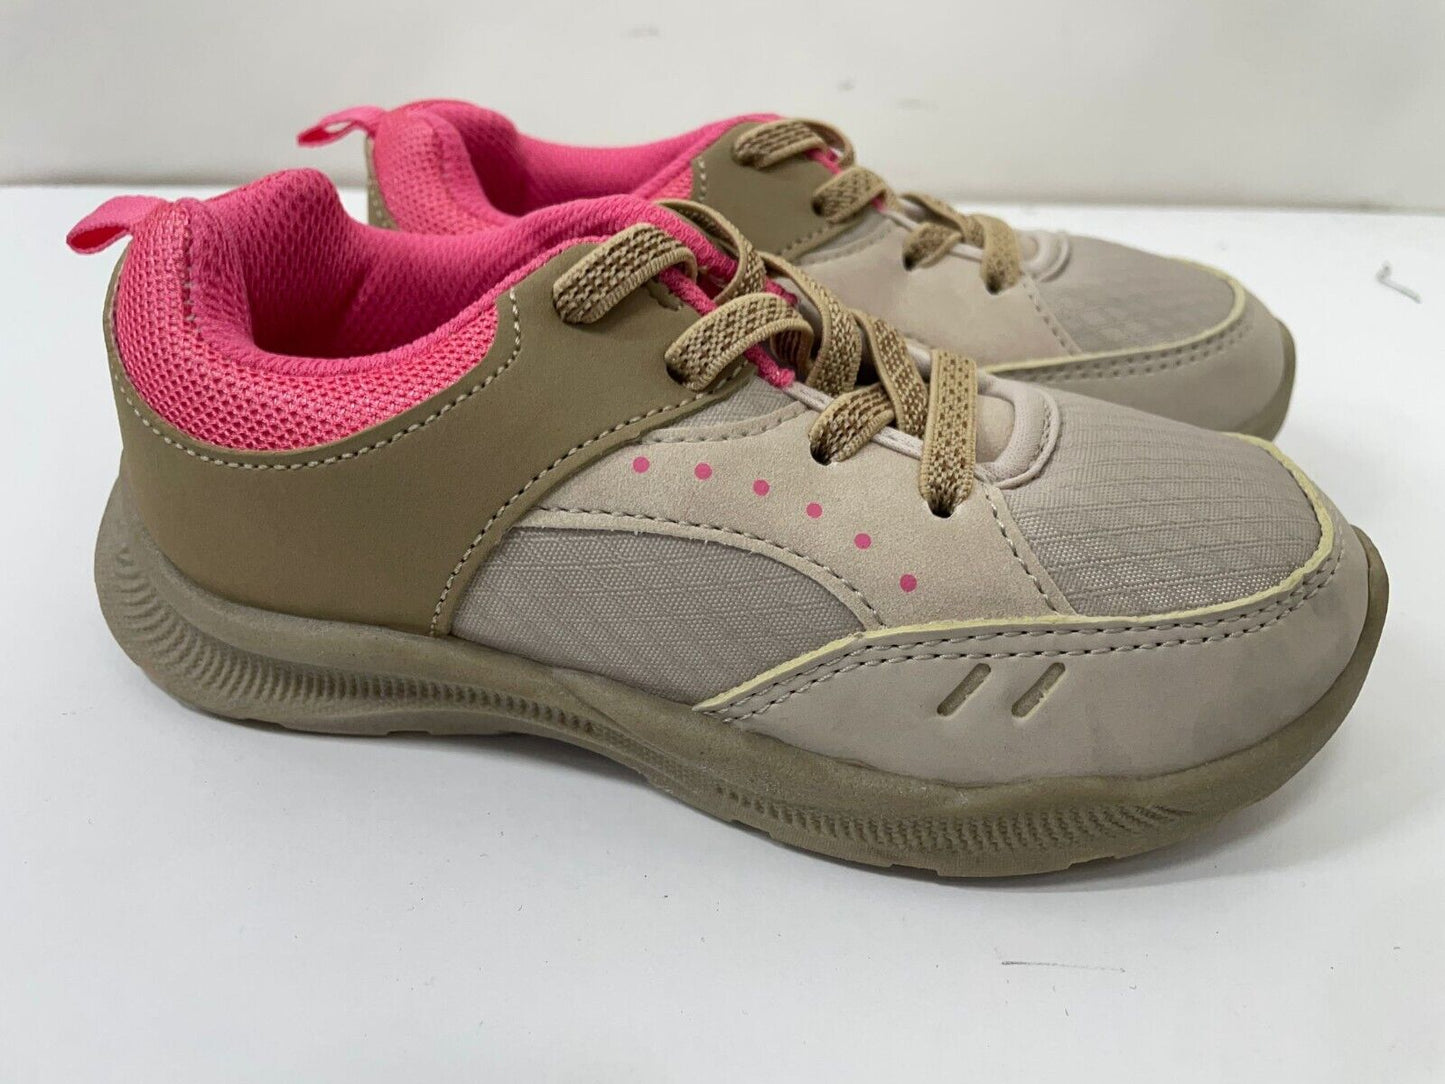 Oshkosh B'gosh Girls Youth Kids 11M Fable Shoes Sneakers Beige Pink